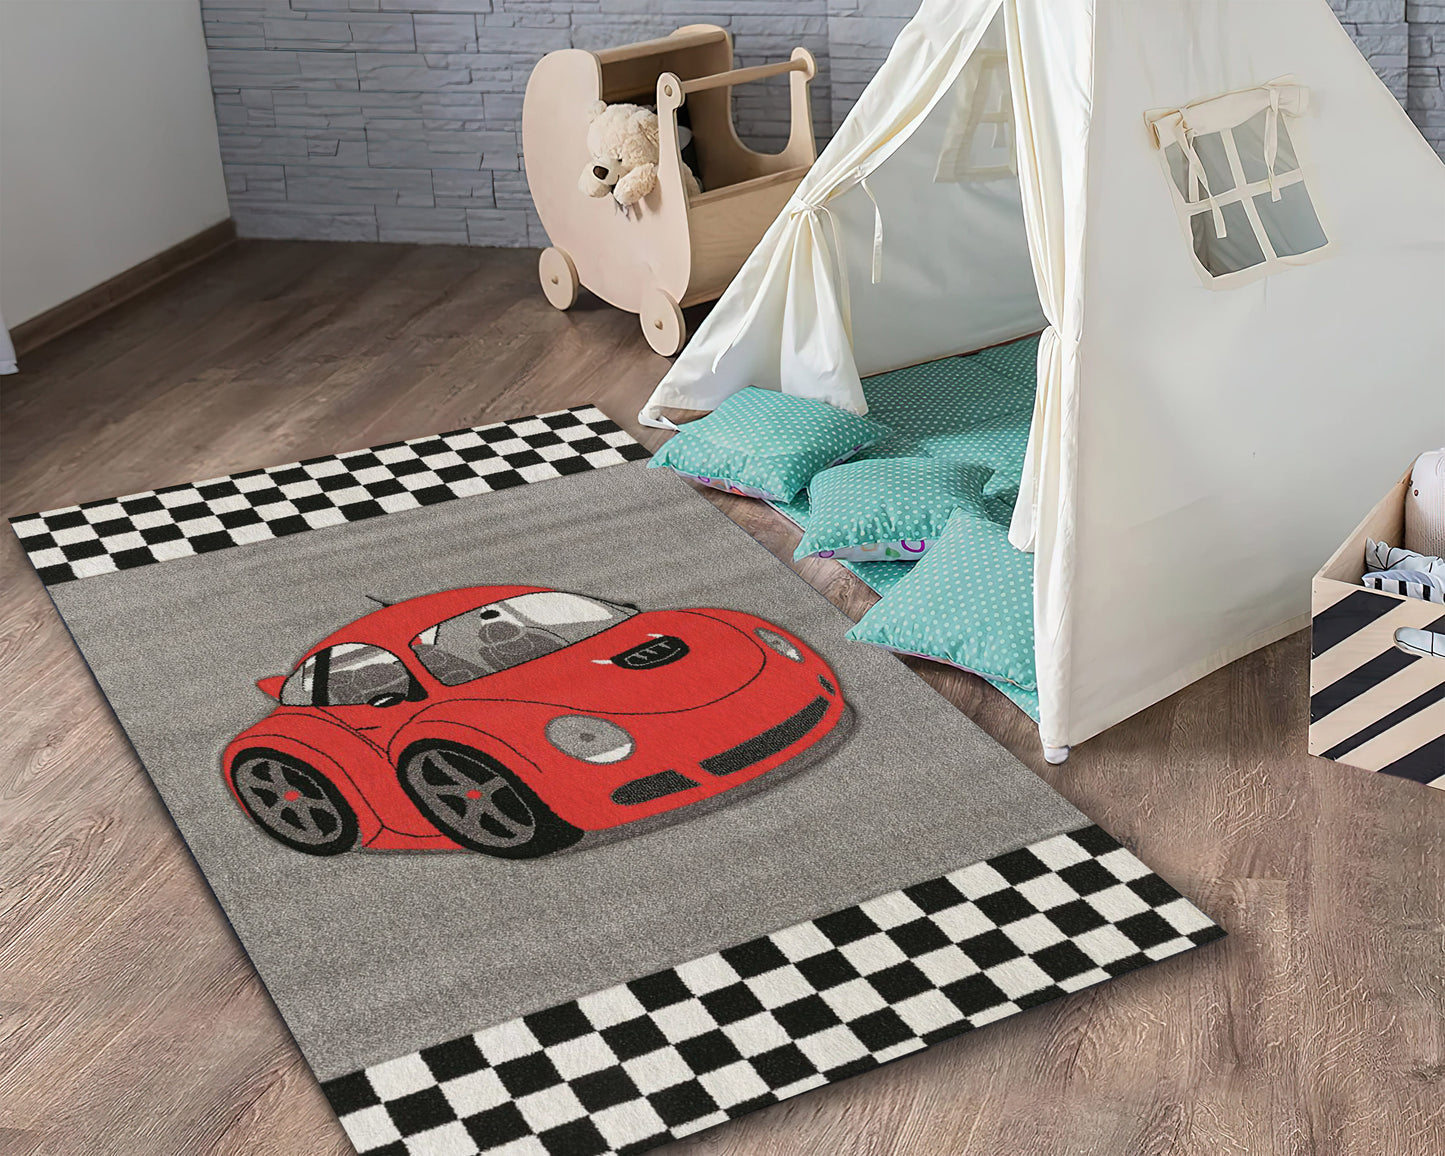 Red Racing Car Rug, Boys Room Carpet, Nursery Play Mat, Children Room Decor, Baby Gift